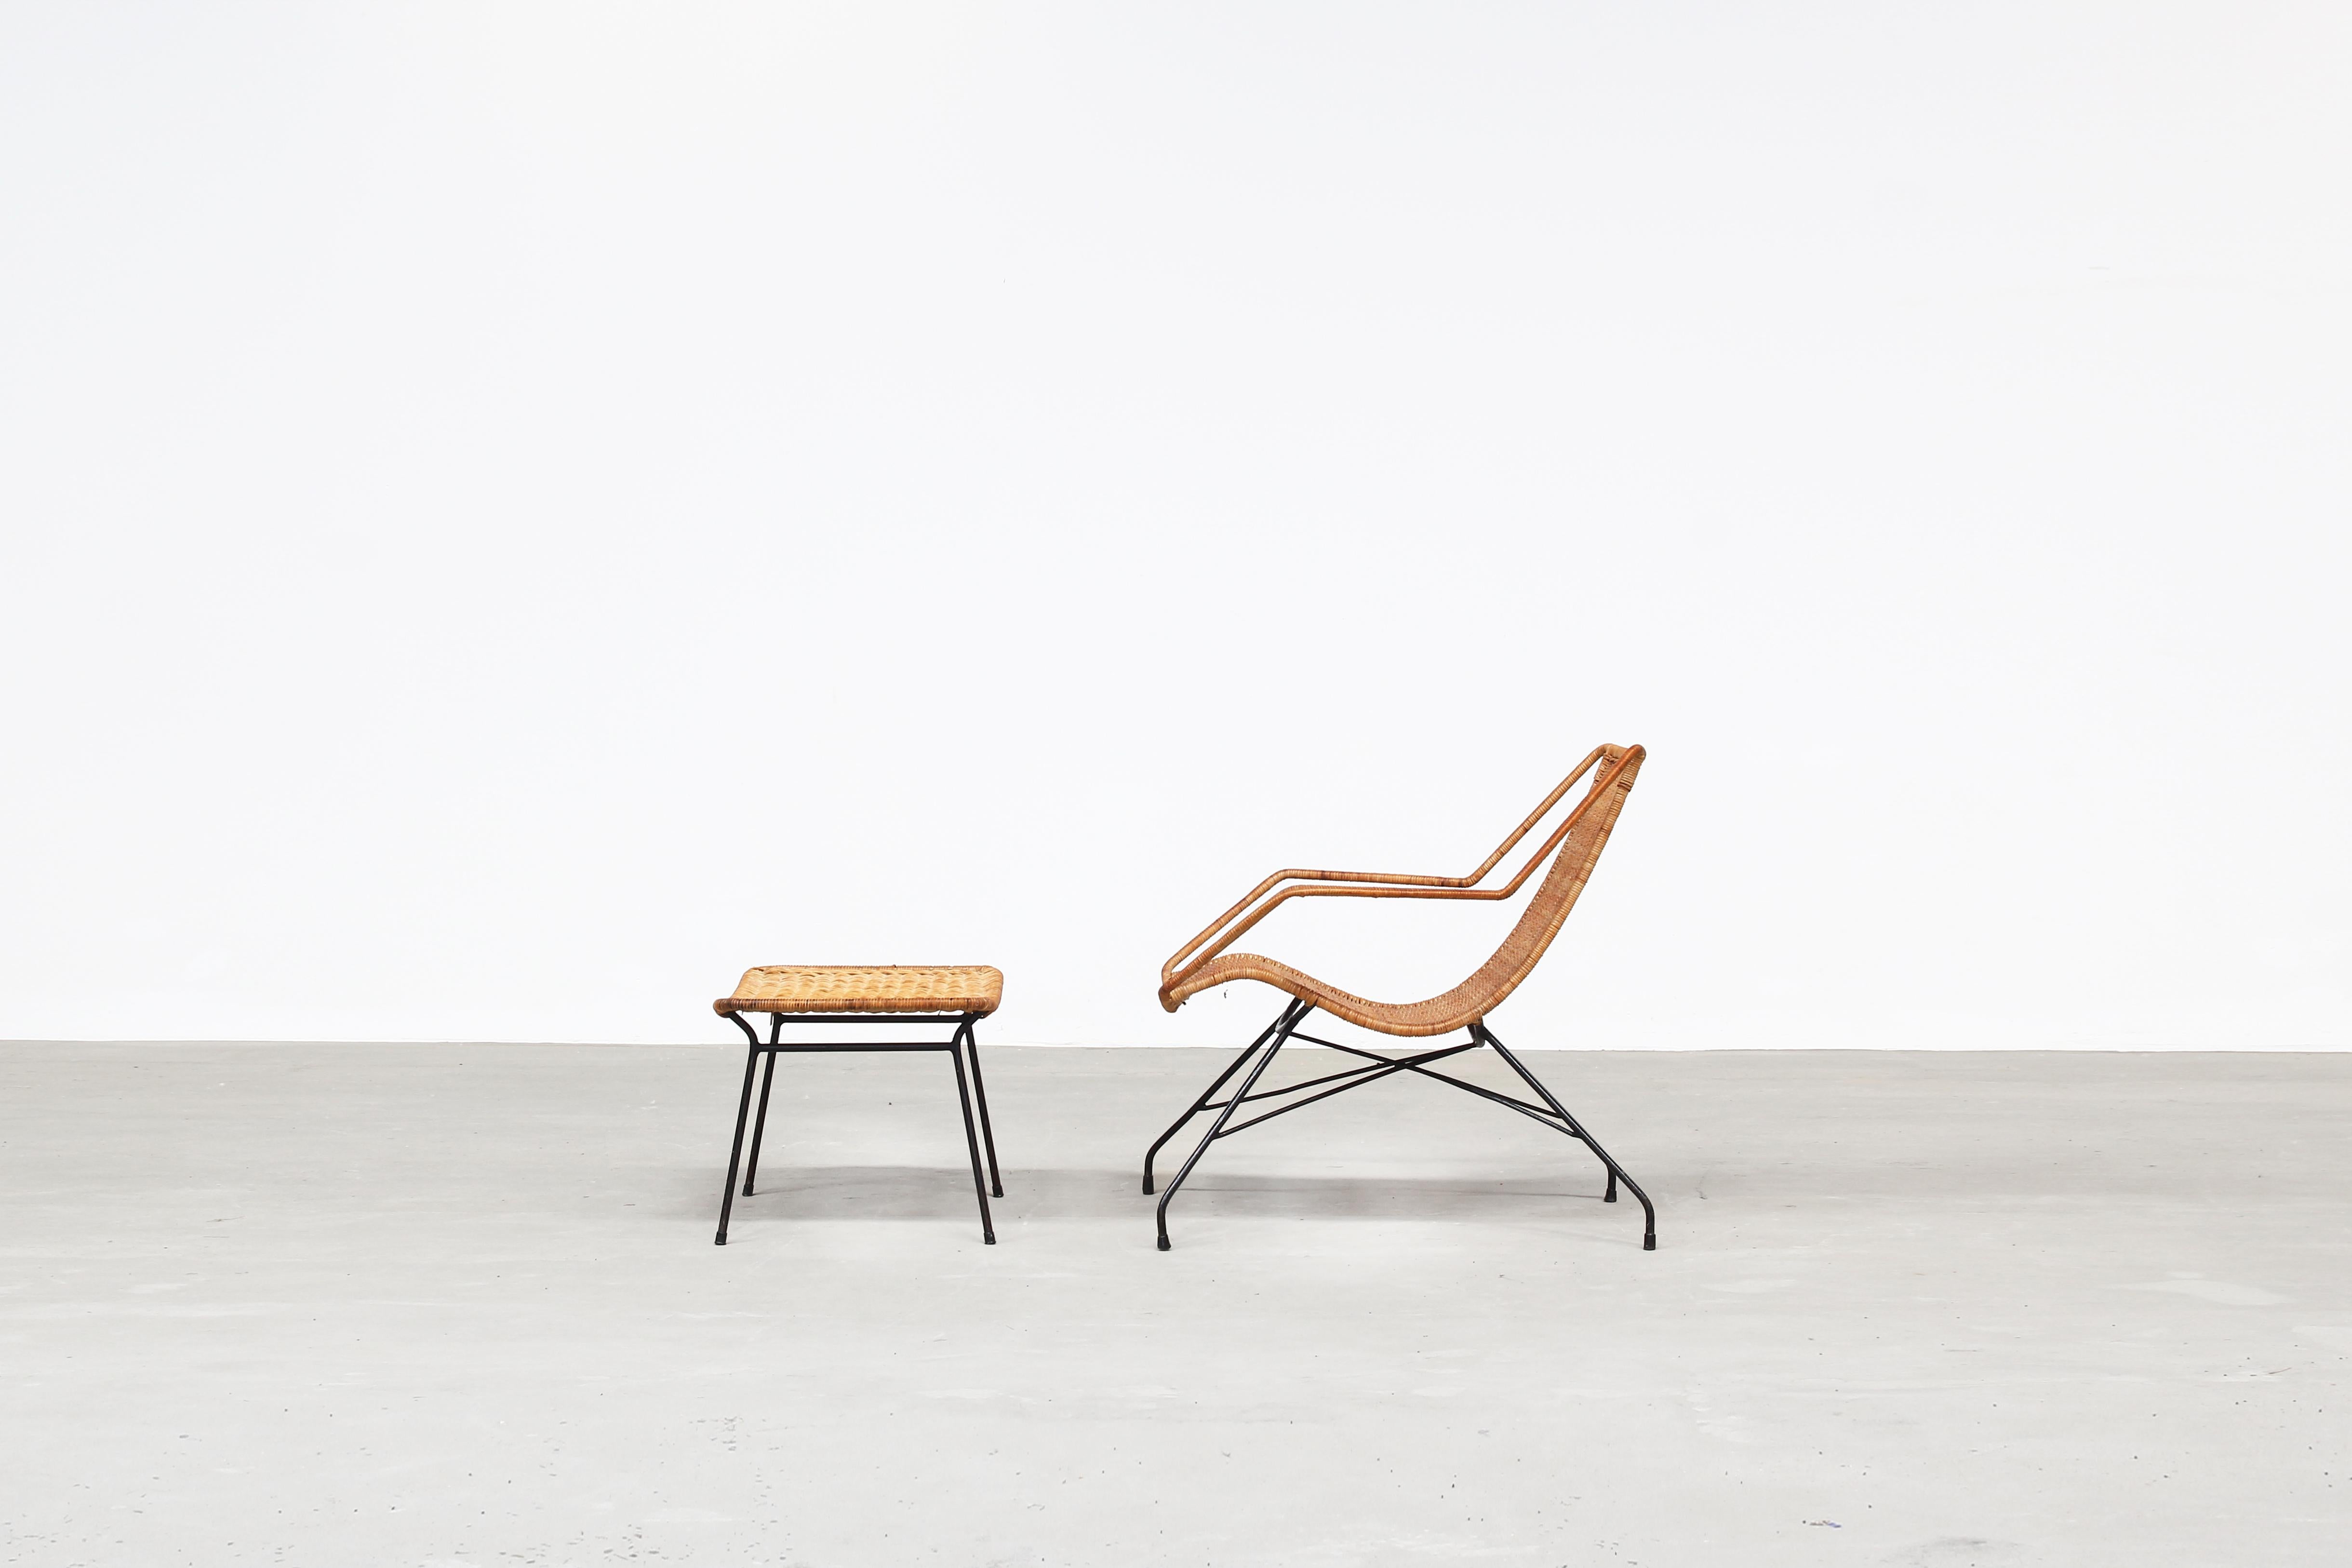 Pair of Rattan Lounge Chairs by Carlo Hauner & Martin Eisler 1